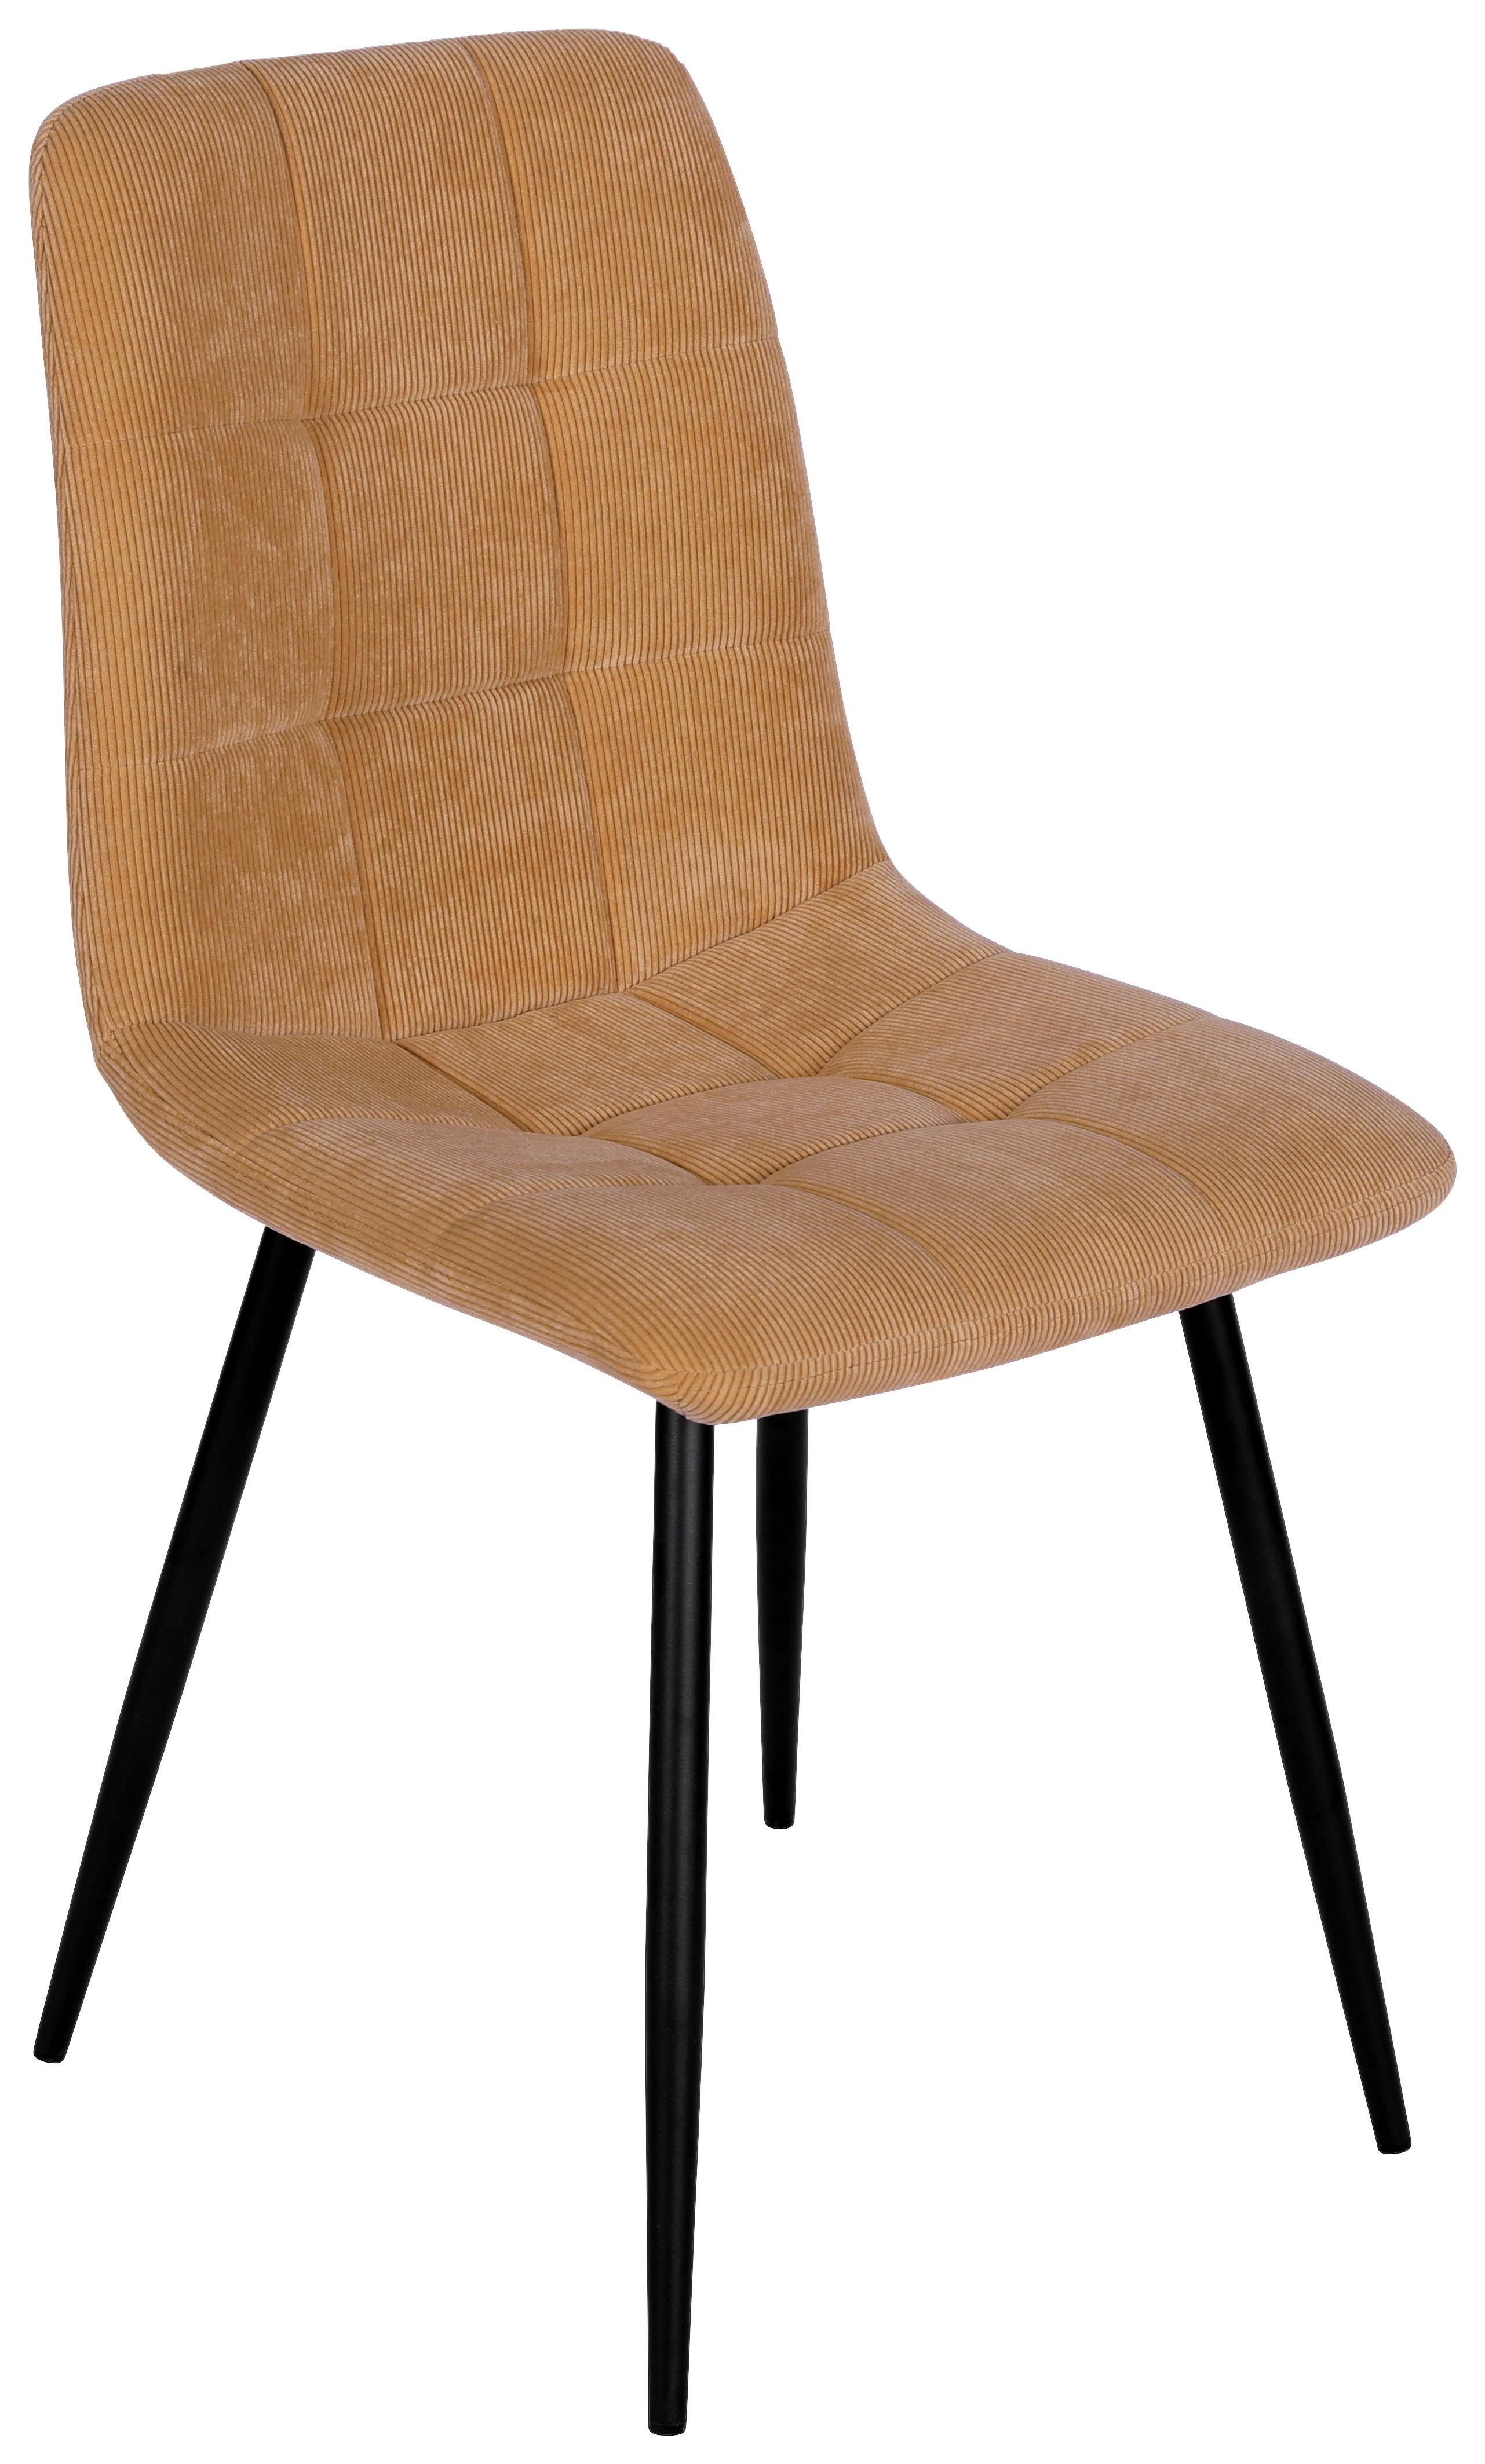 Stuhl aus Kord in Gelb - Gelb/Schwarz, MODERN, Holz/Textil (45/87/57cm) - Based